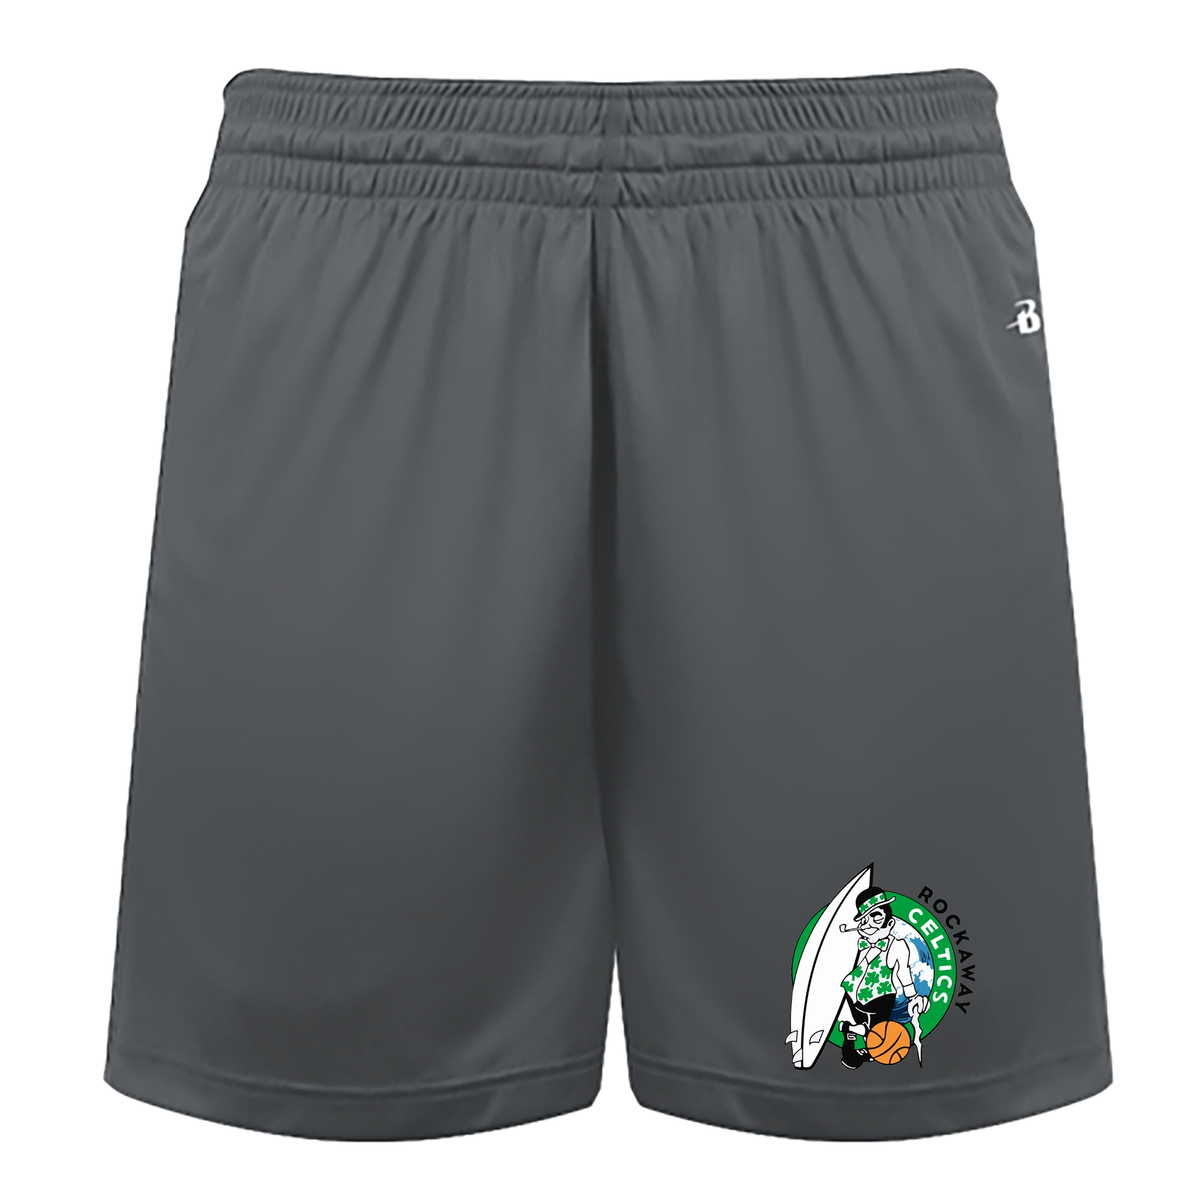 Rockaway Celtics Soft-Lock Women's Shorts